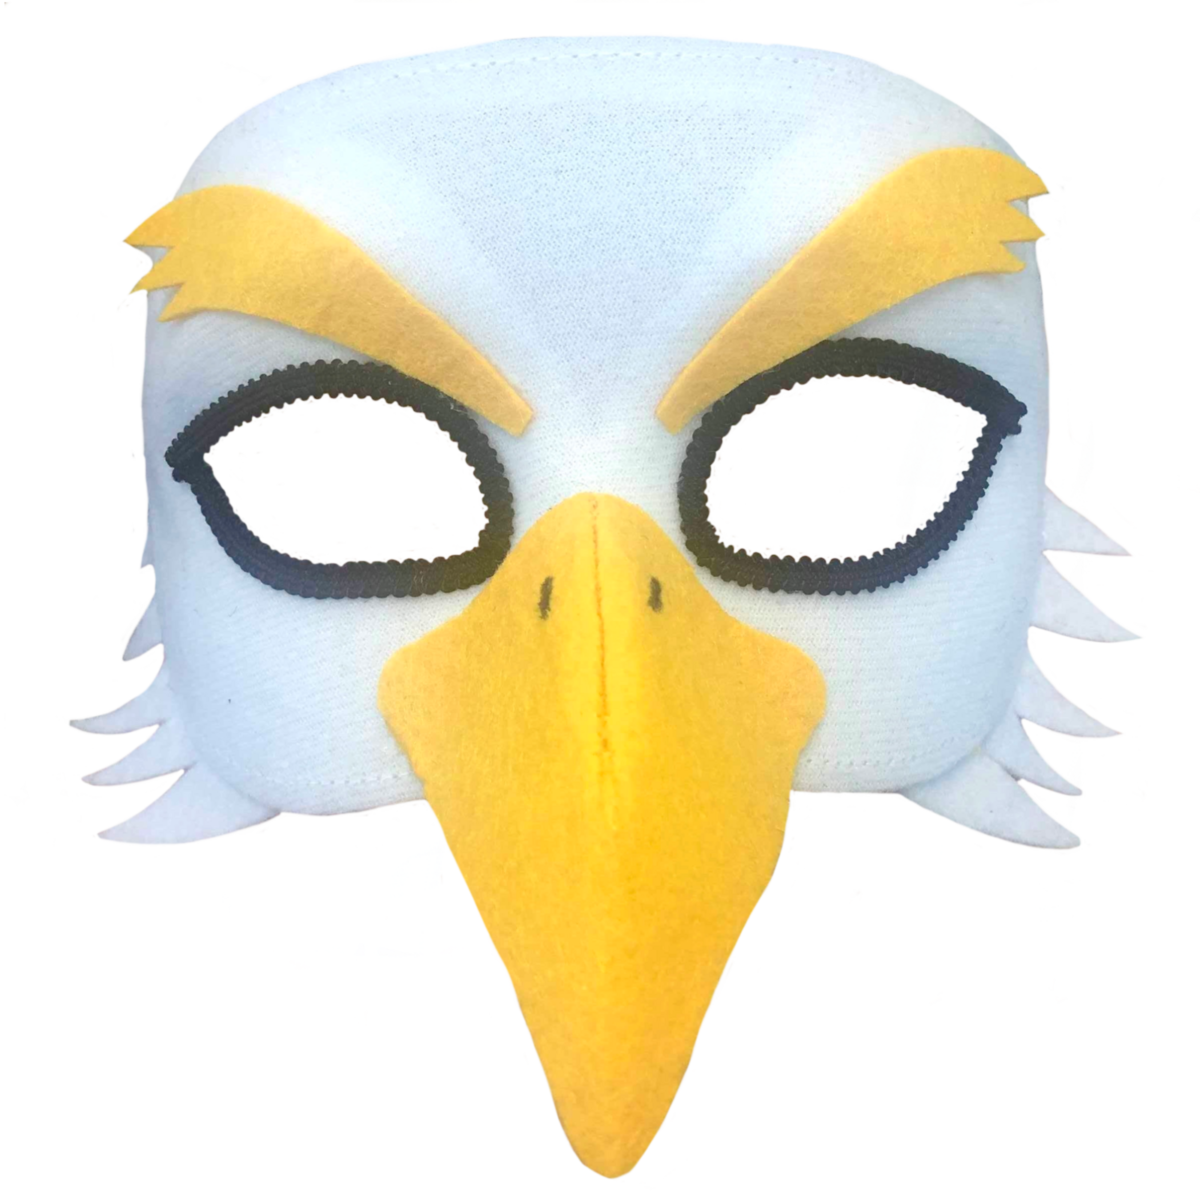 eagle animal mask book week costume sunbury costumes